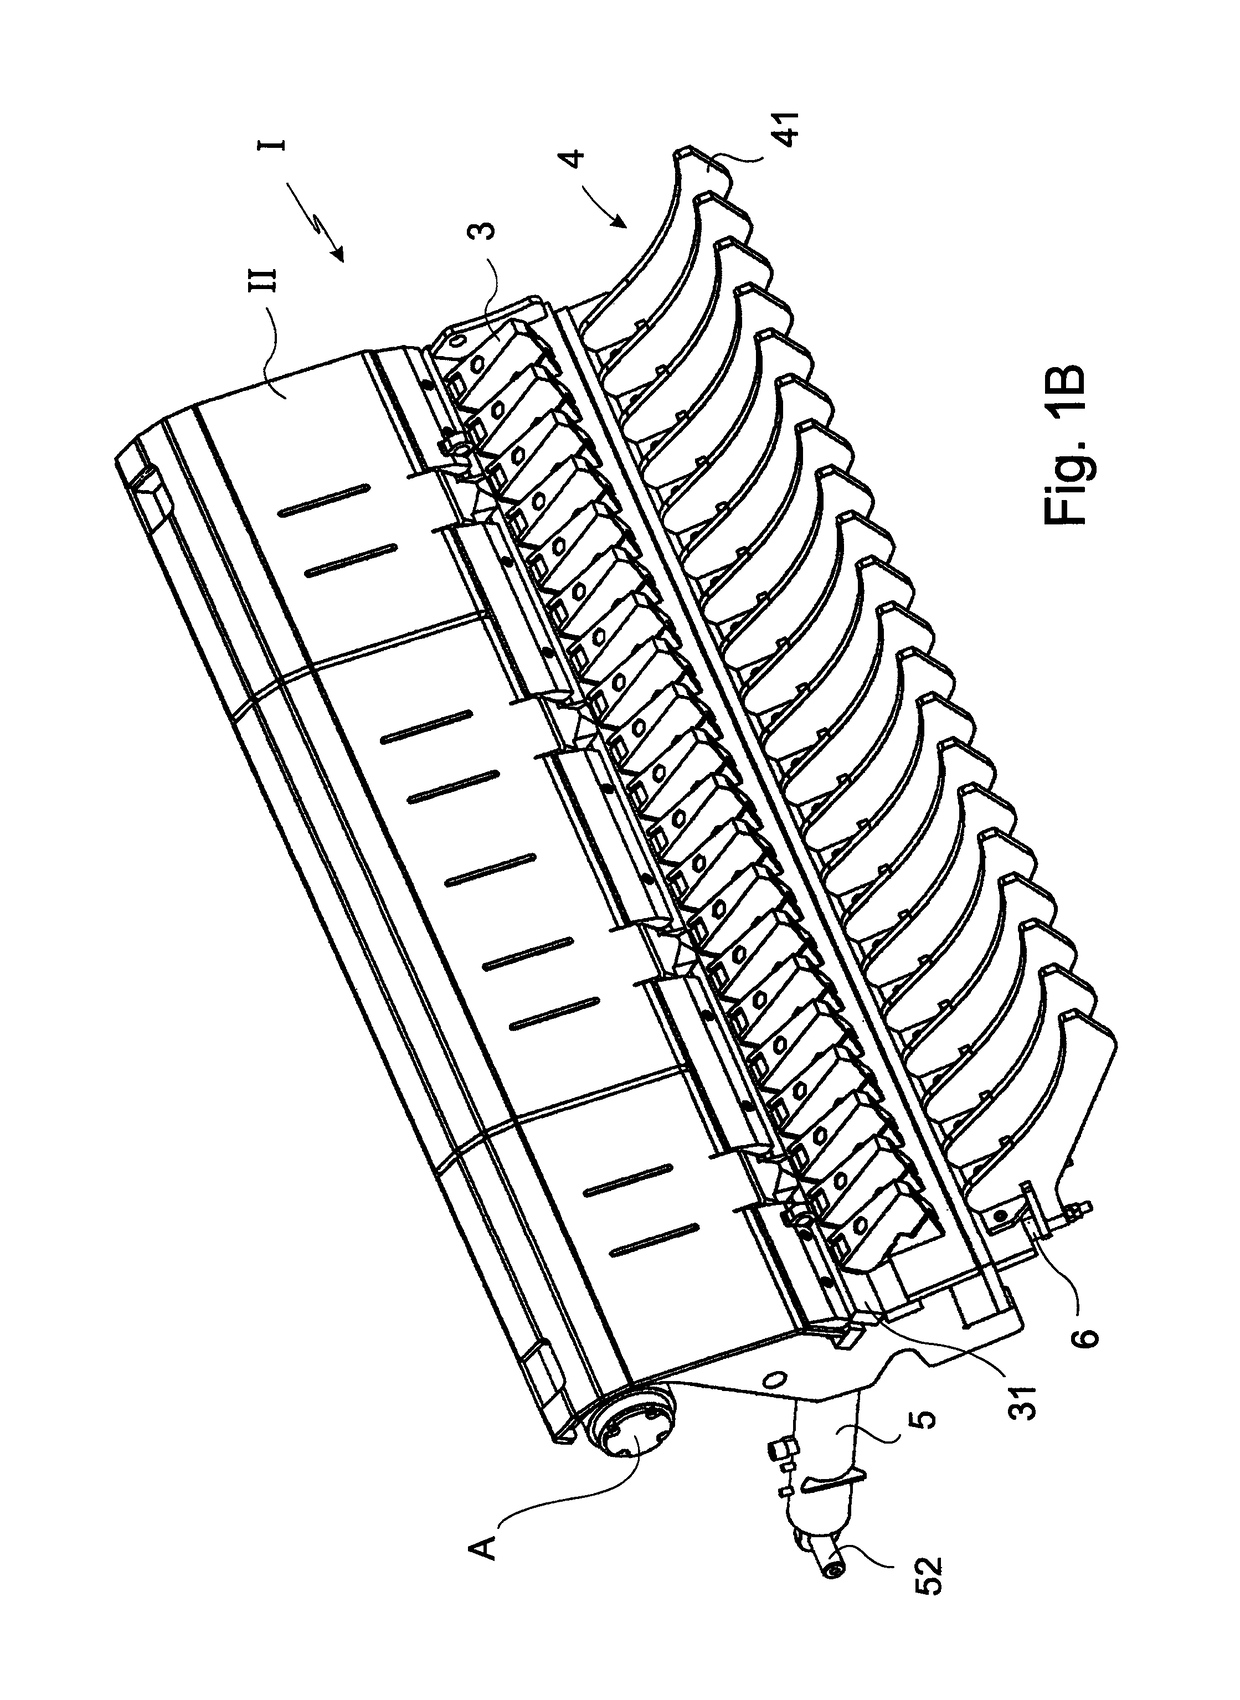 Disintegrating device comprising a comb system